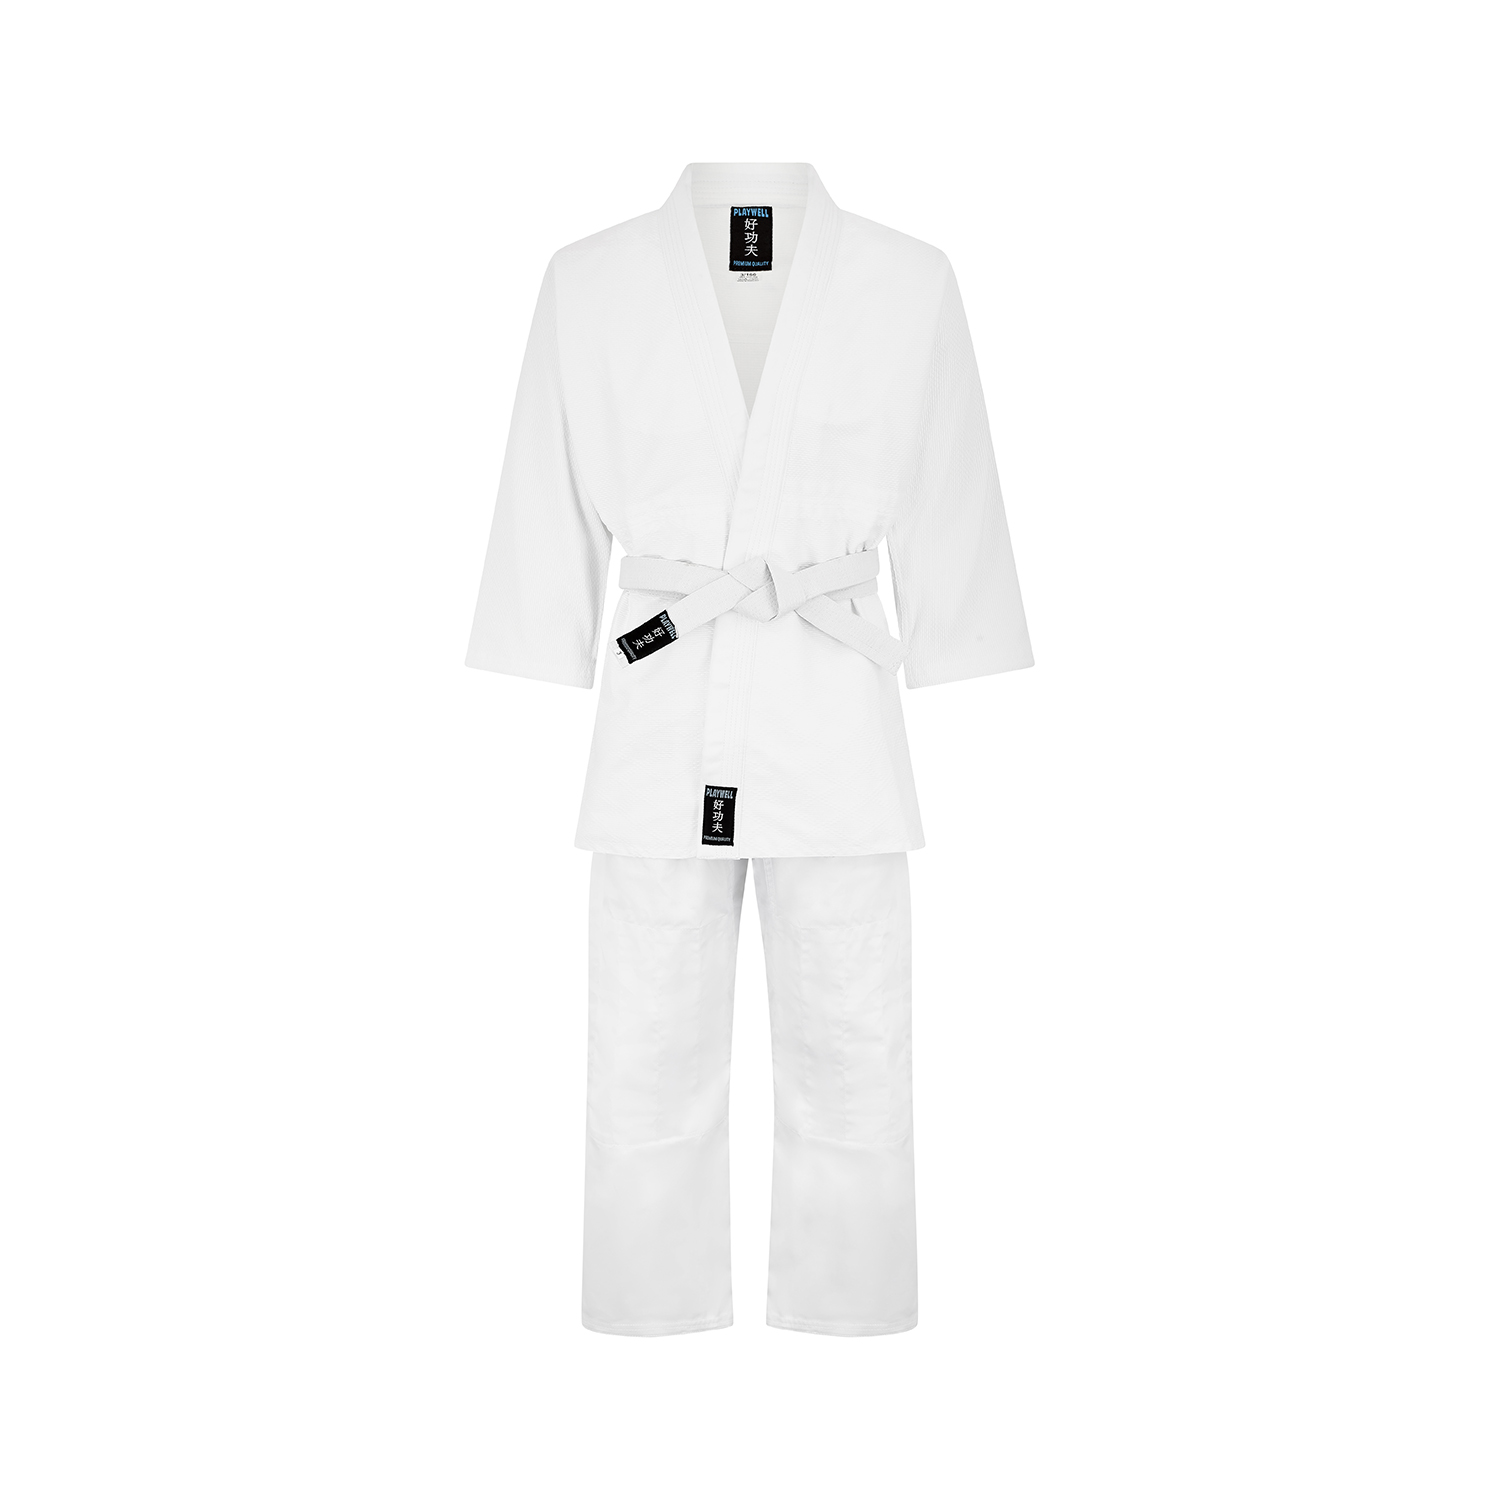 Playwell Premium Kids Judo Suit - White 380g - Click Image to Close